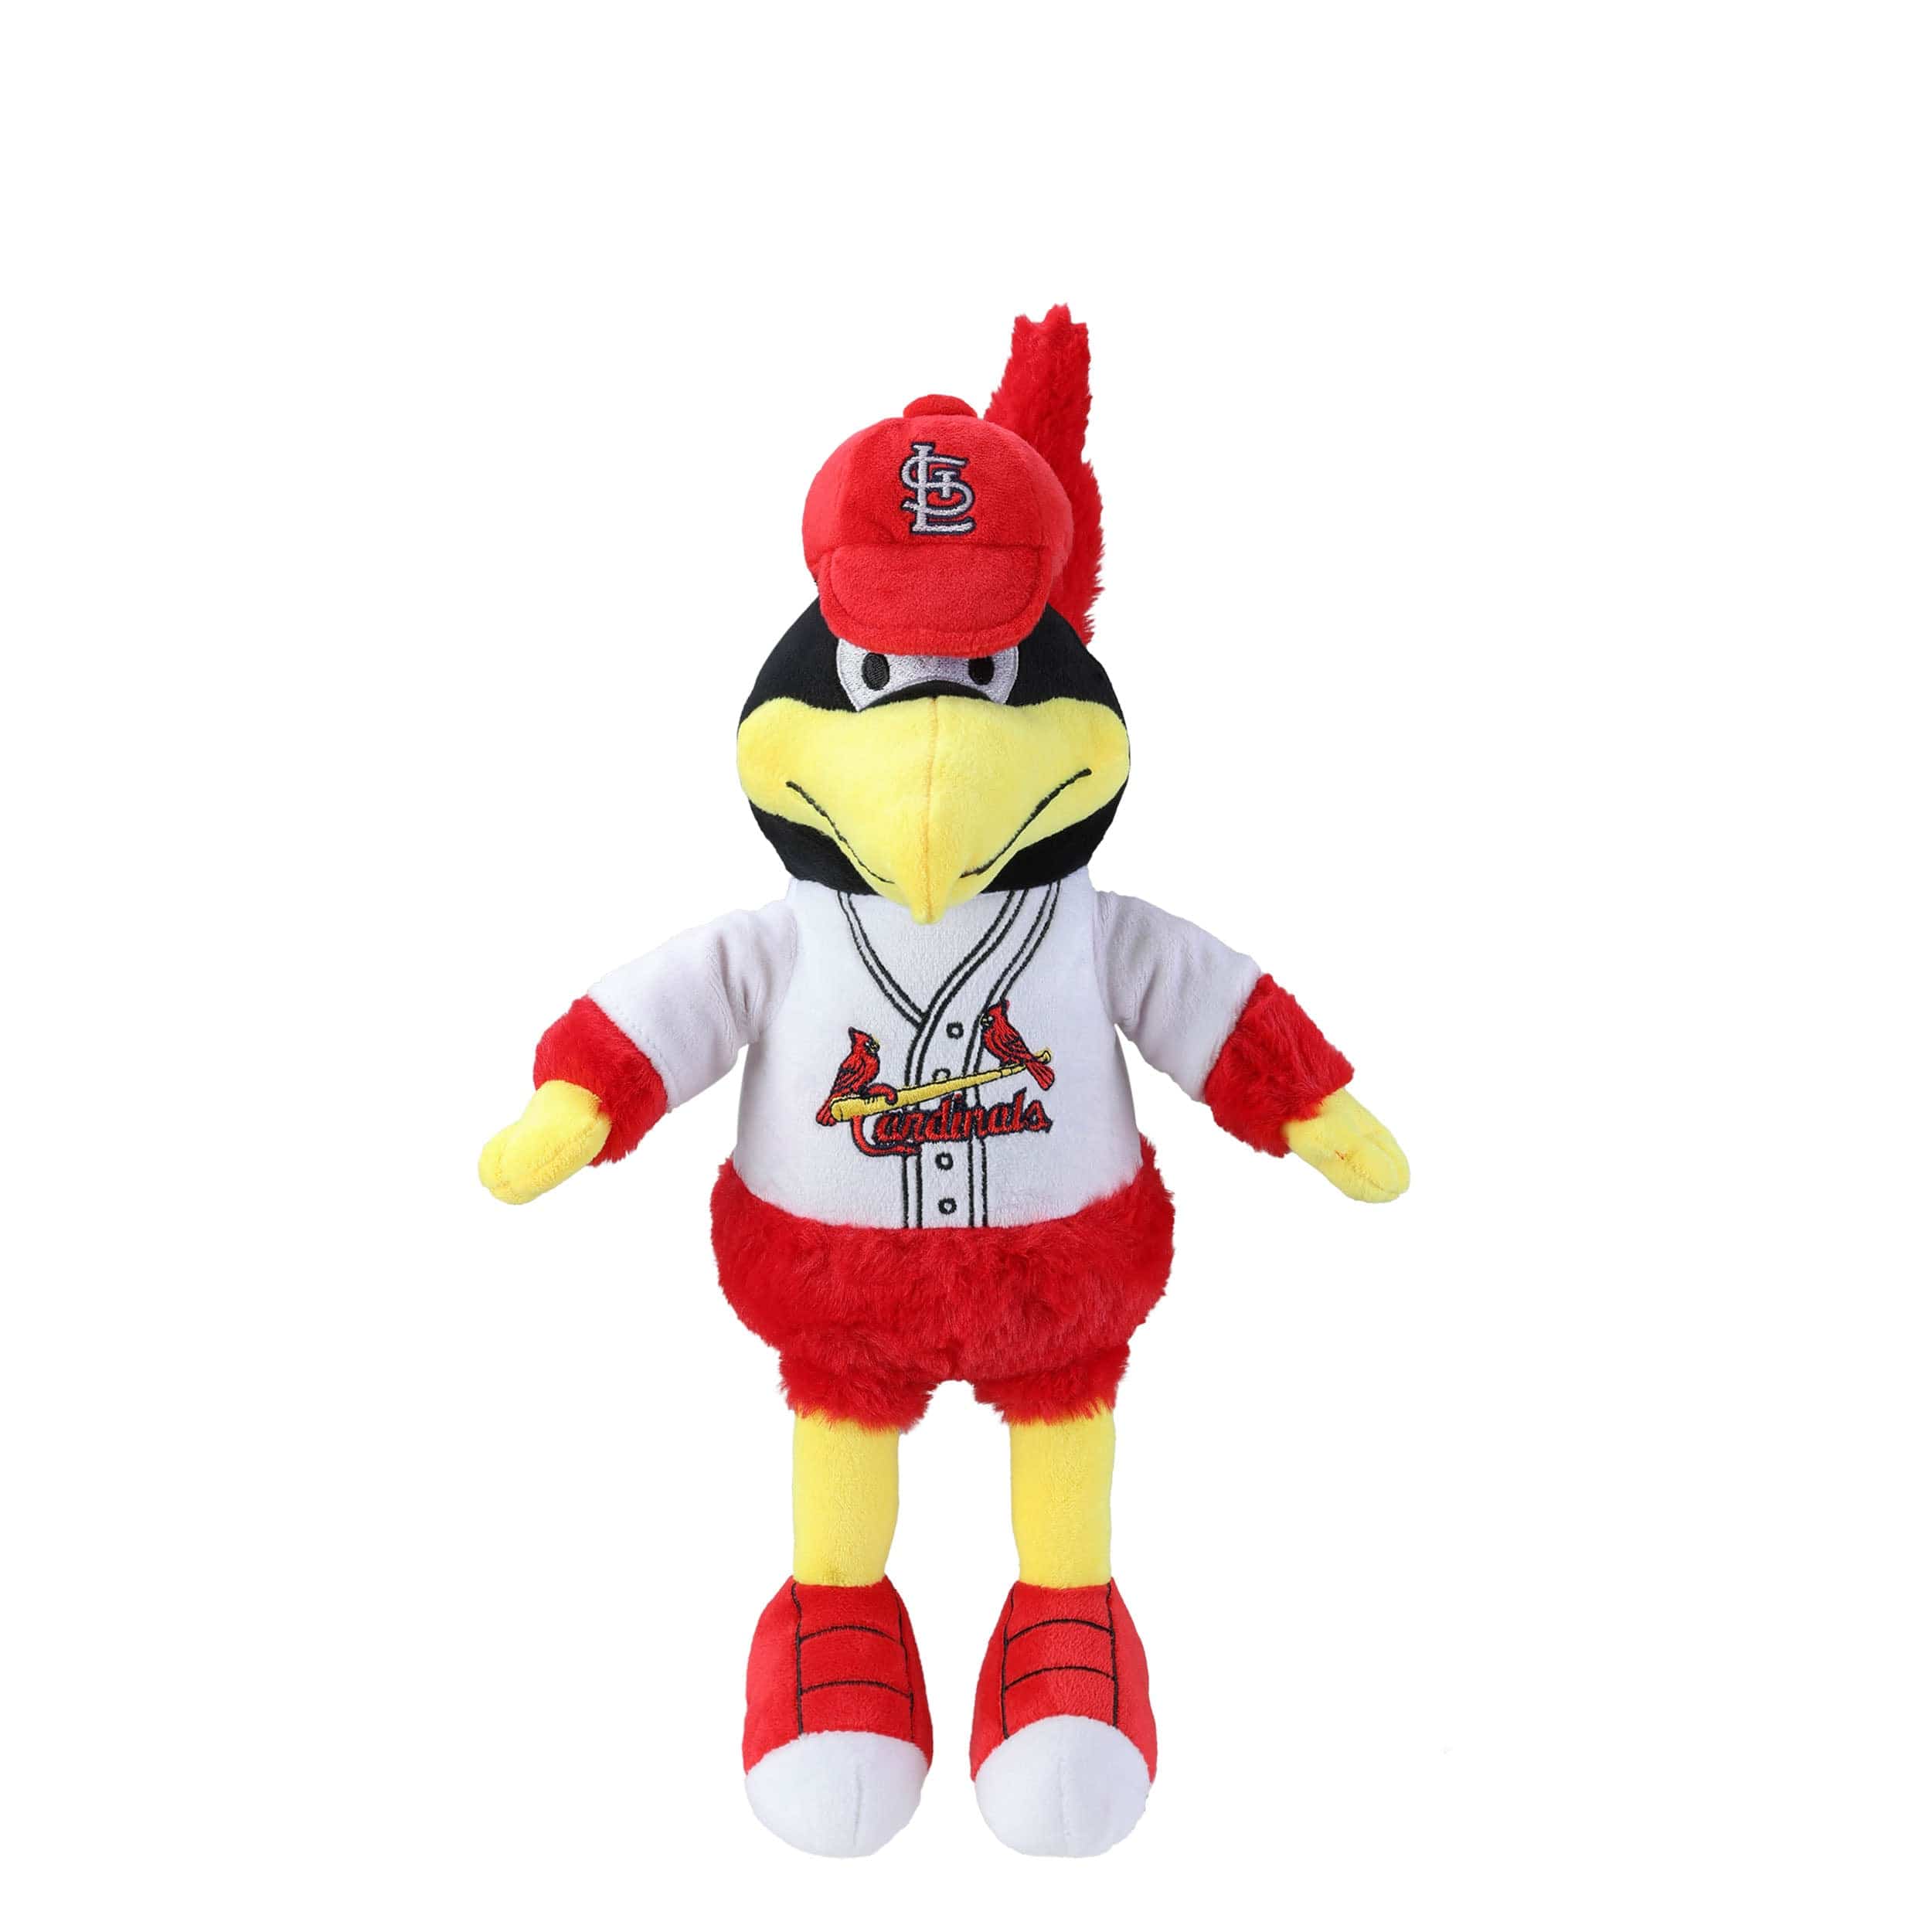 St. Louis Cardinals: Fredbird 2021 Mascot - Officially Licensed